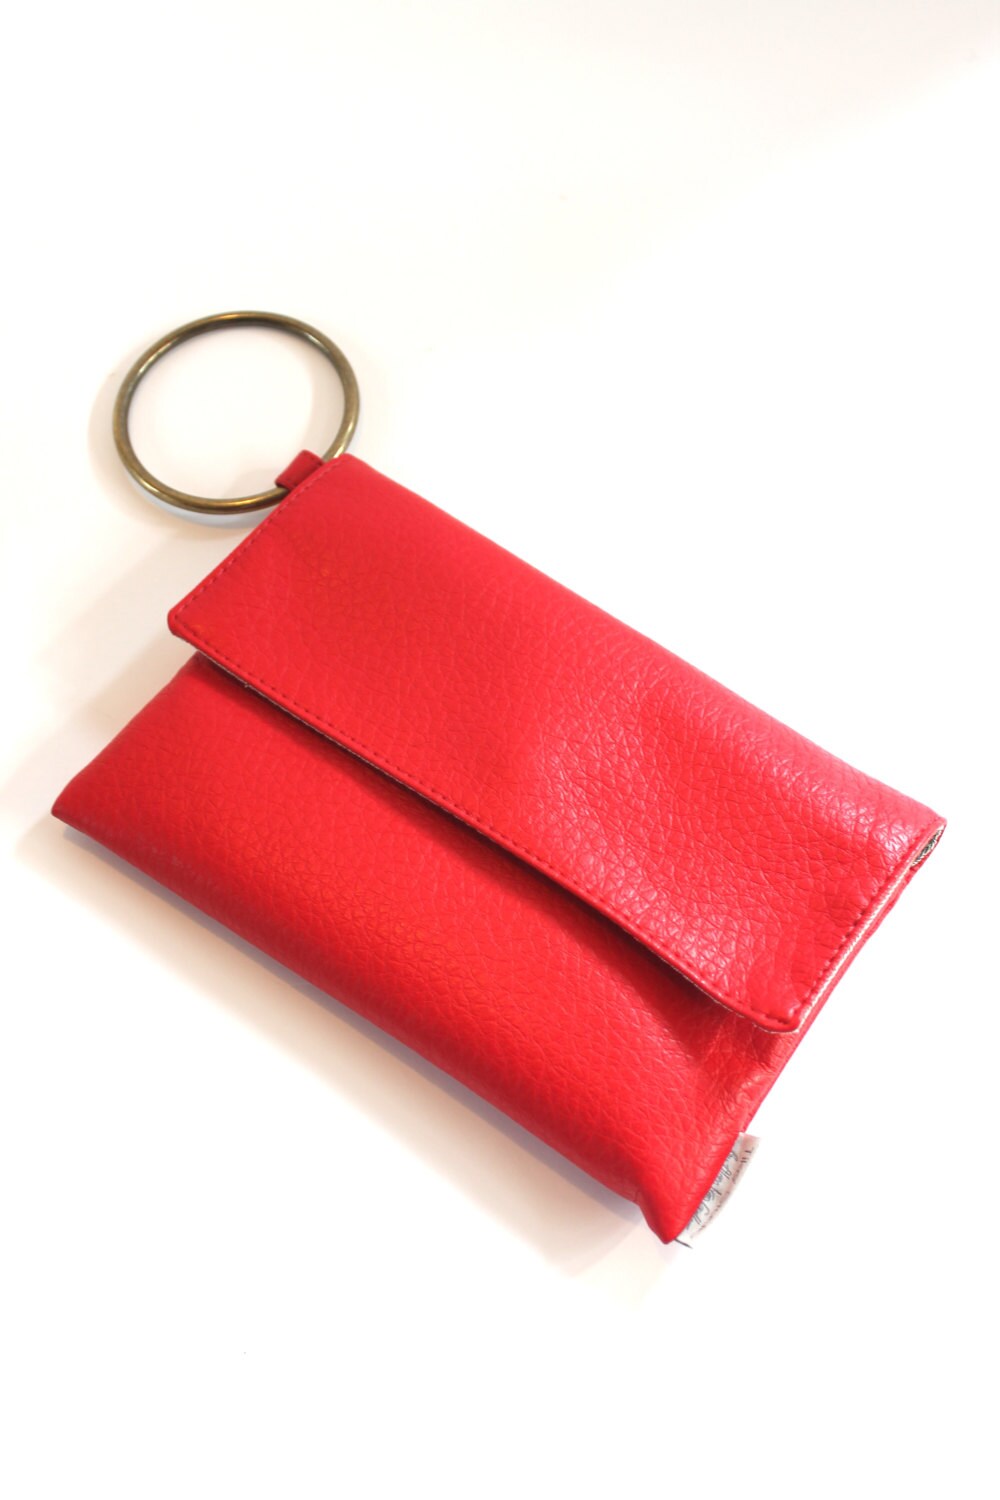 Red Wristlet Woman Mini Handbag Vegan Clutch Purse Casual